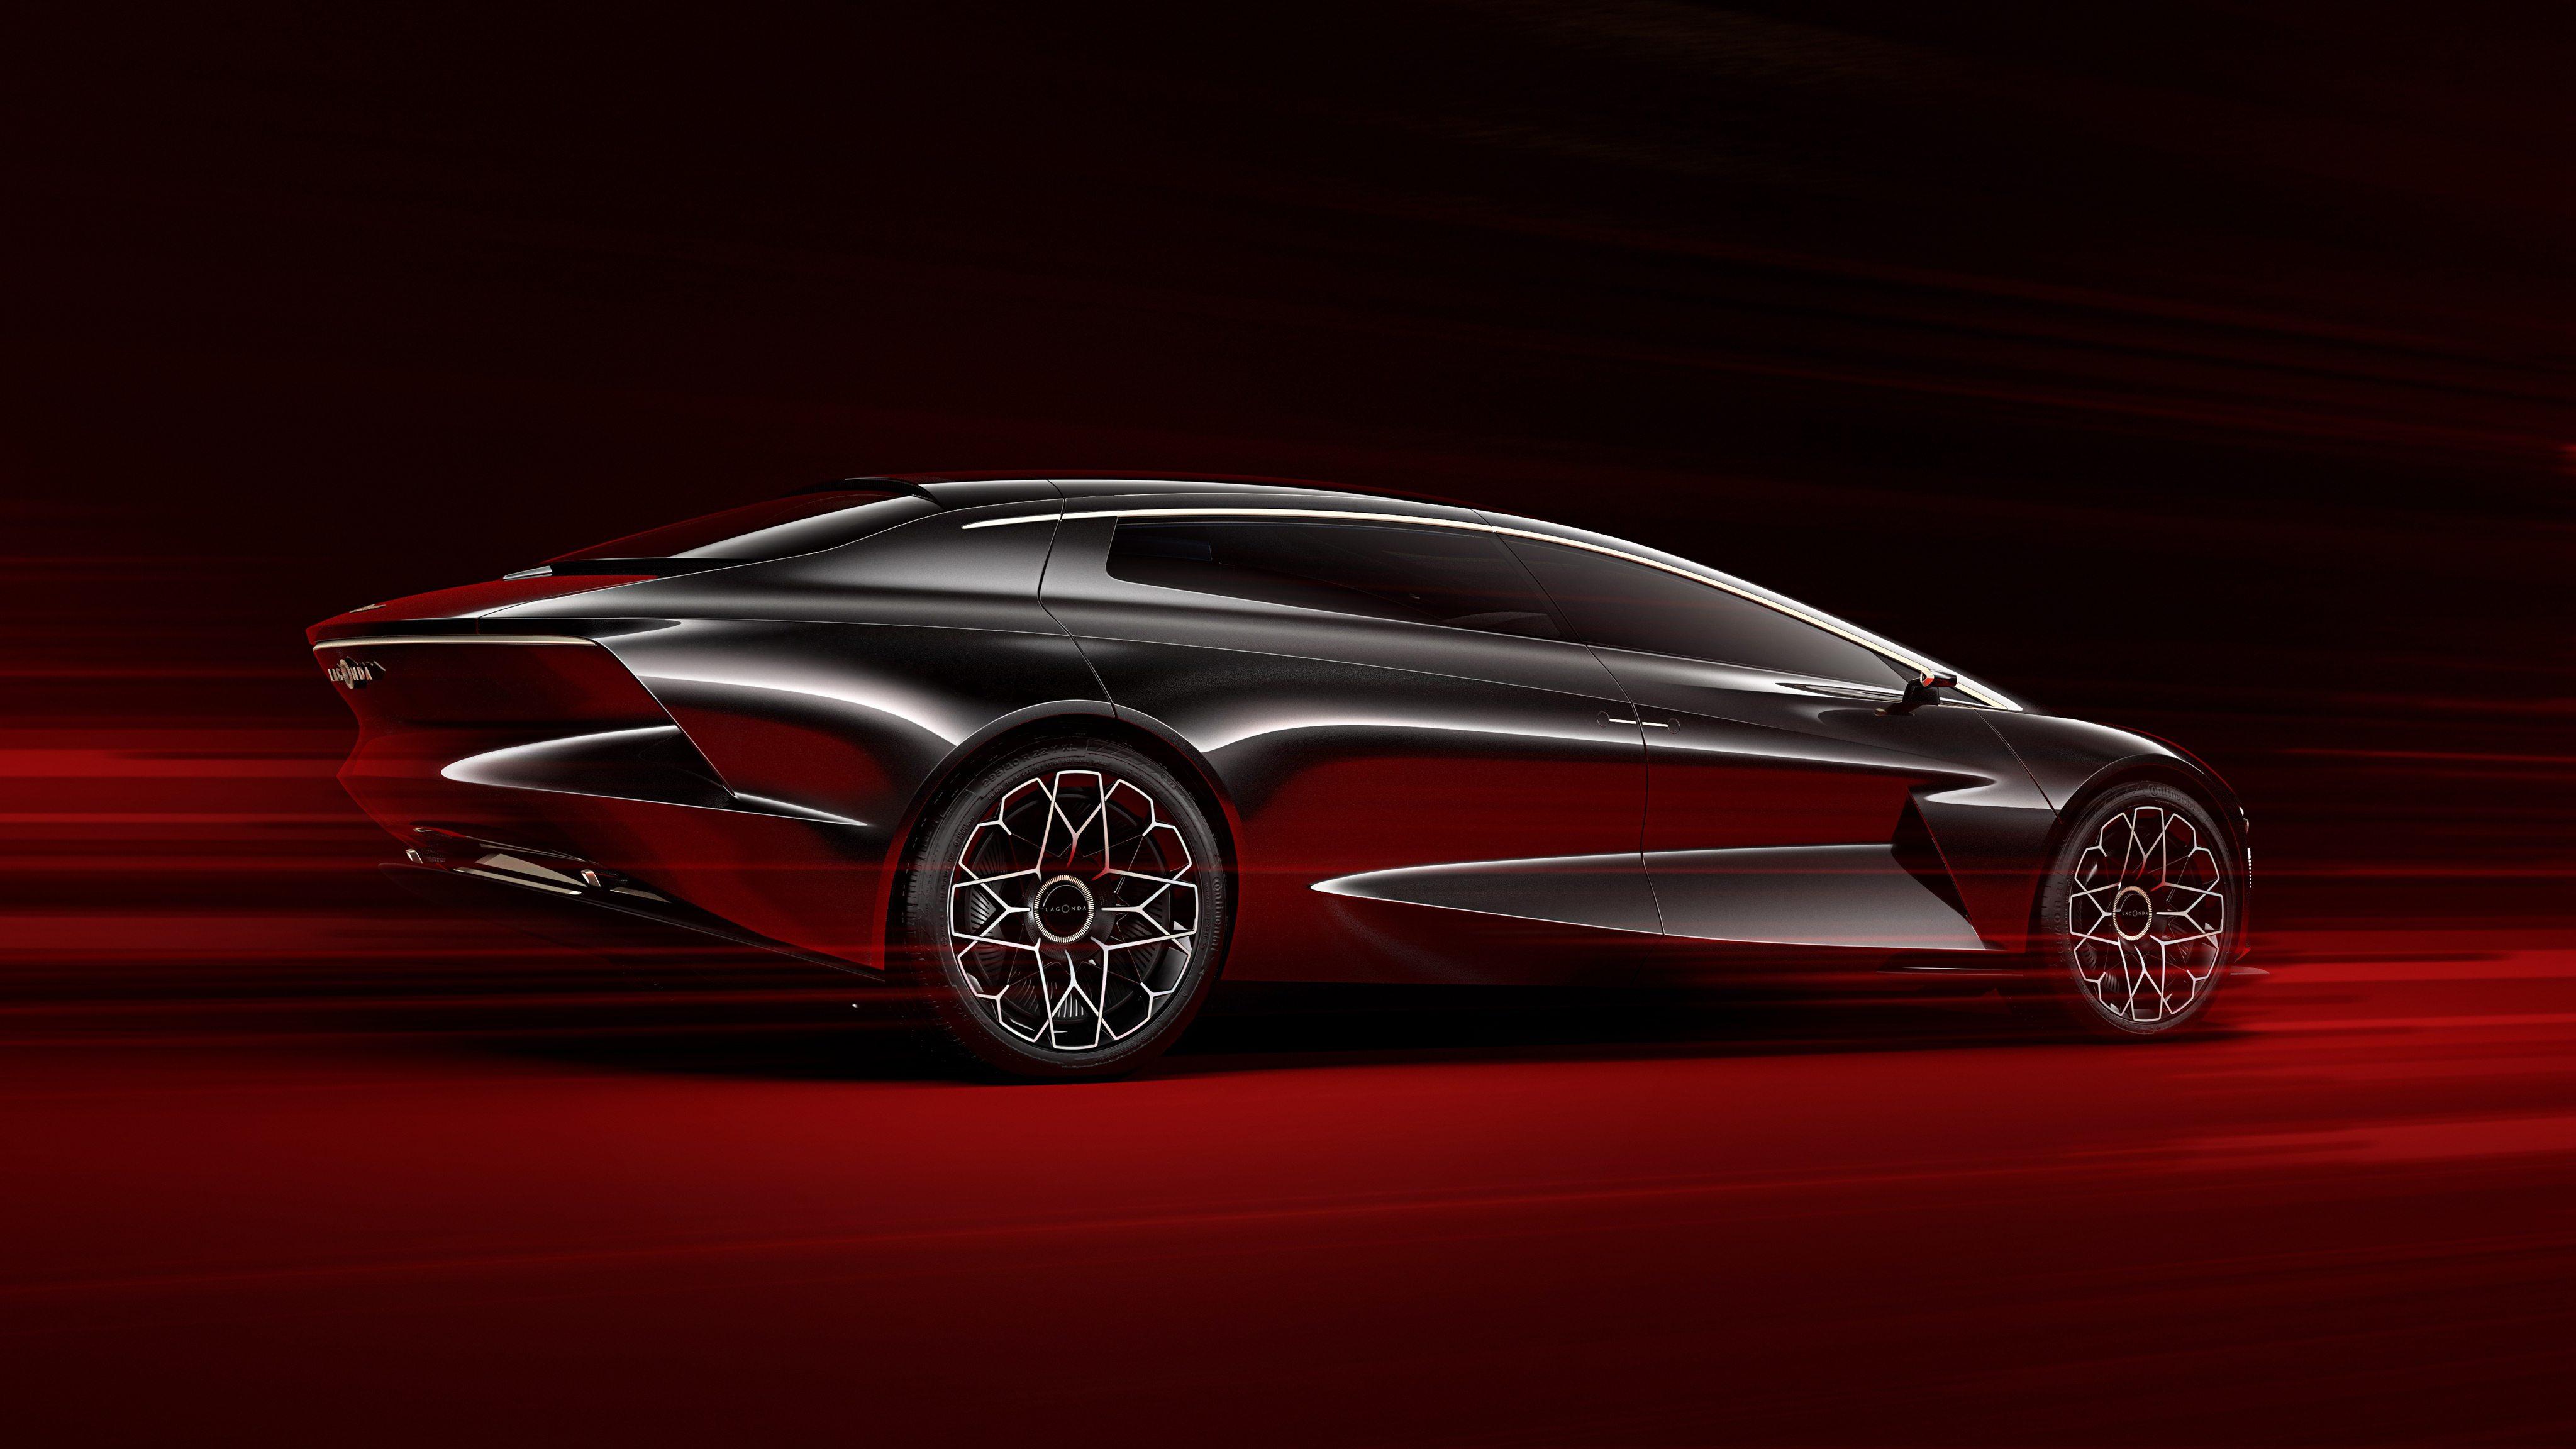 The Future Of Luxury: Introducing The 2018 Aston Martin Lagonda Vision Concept